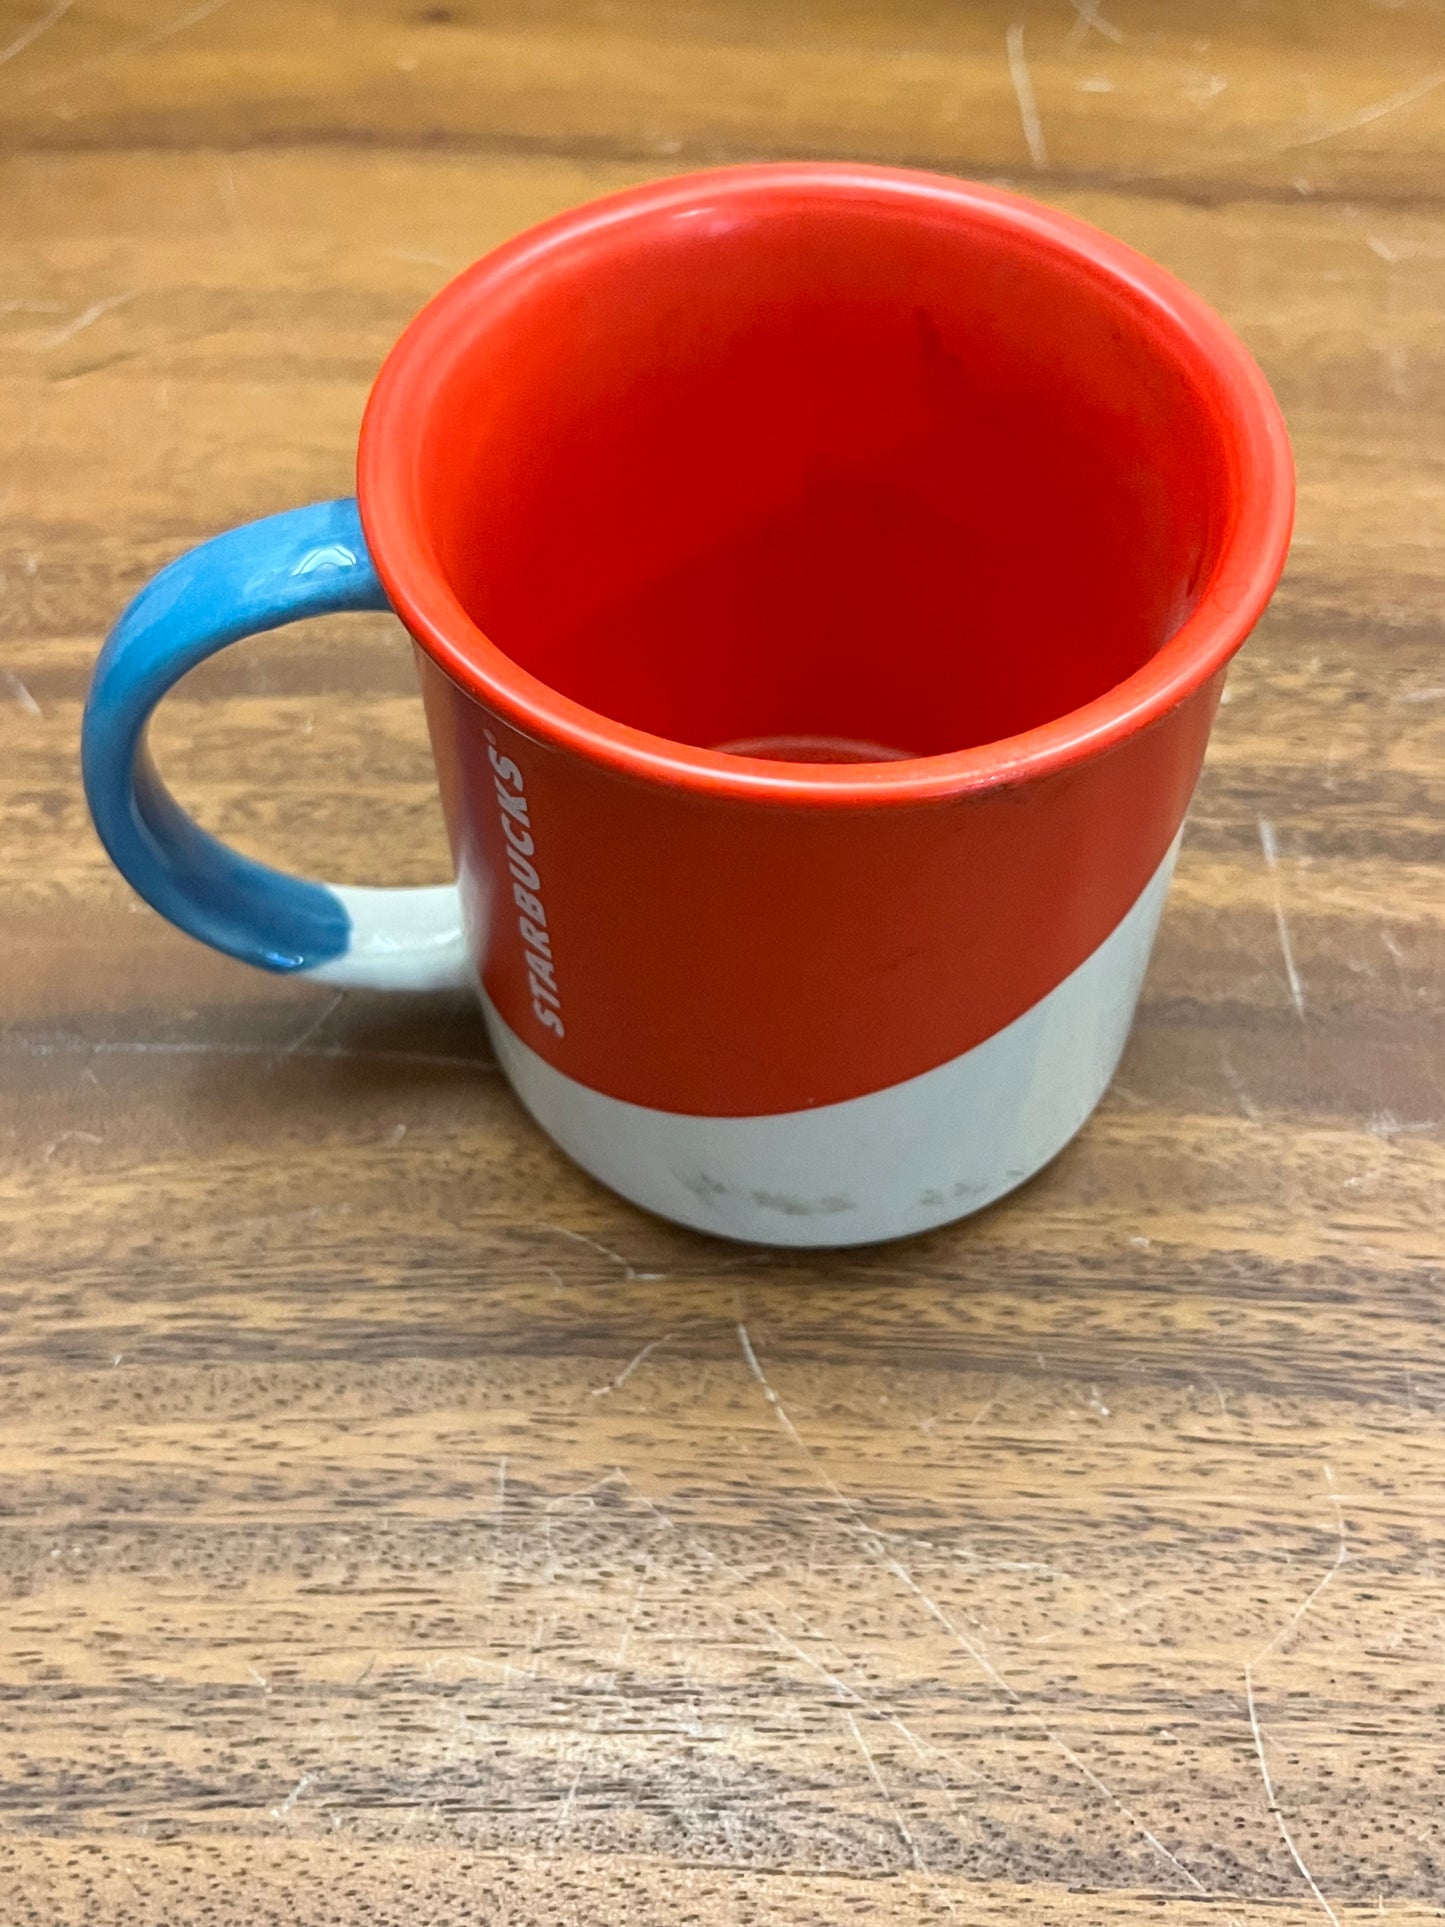 NEW GIRL: Jessica Day's Coffee Mug